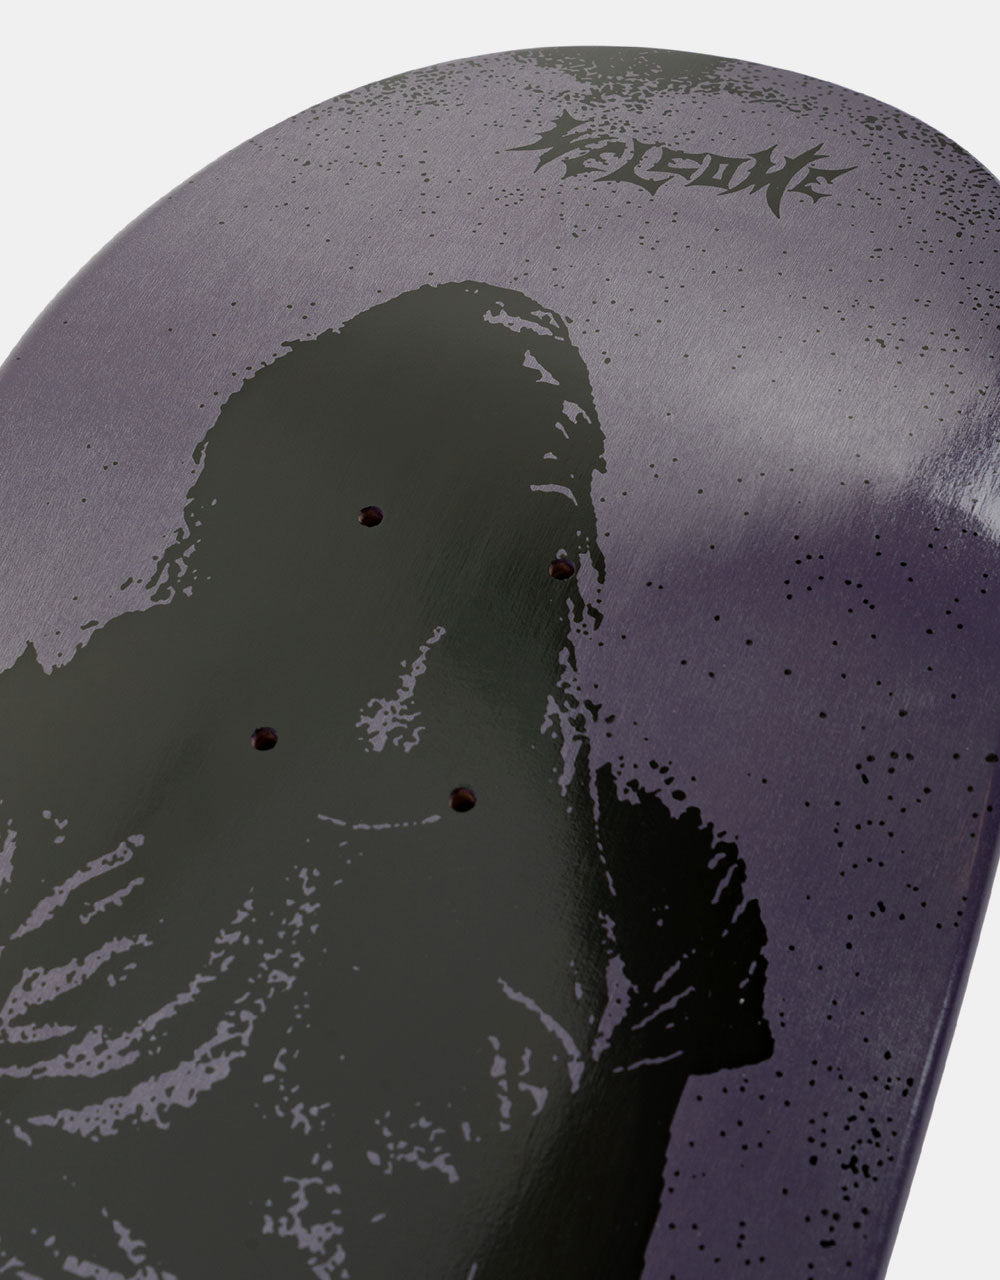 Welcome x Nine Inch Nails Burn on Boline 2.0 Skateboard Deck - 9.5"